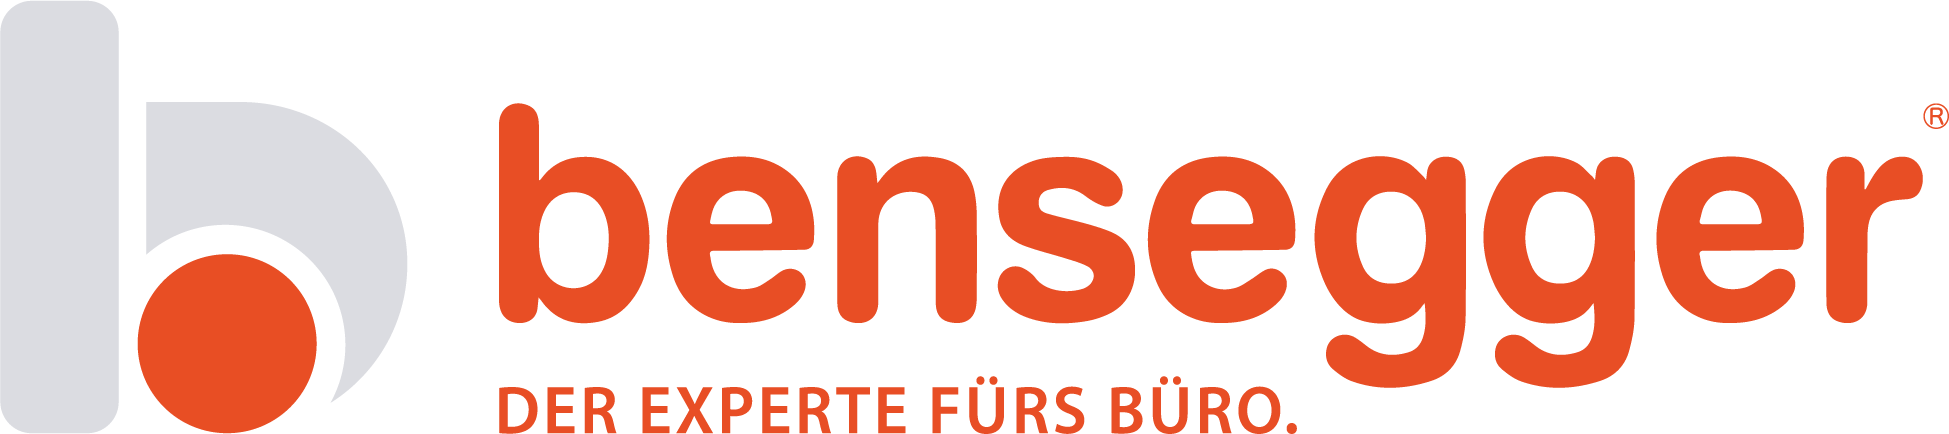 Bensegger GmbH – Canon Accredited Partner